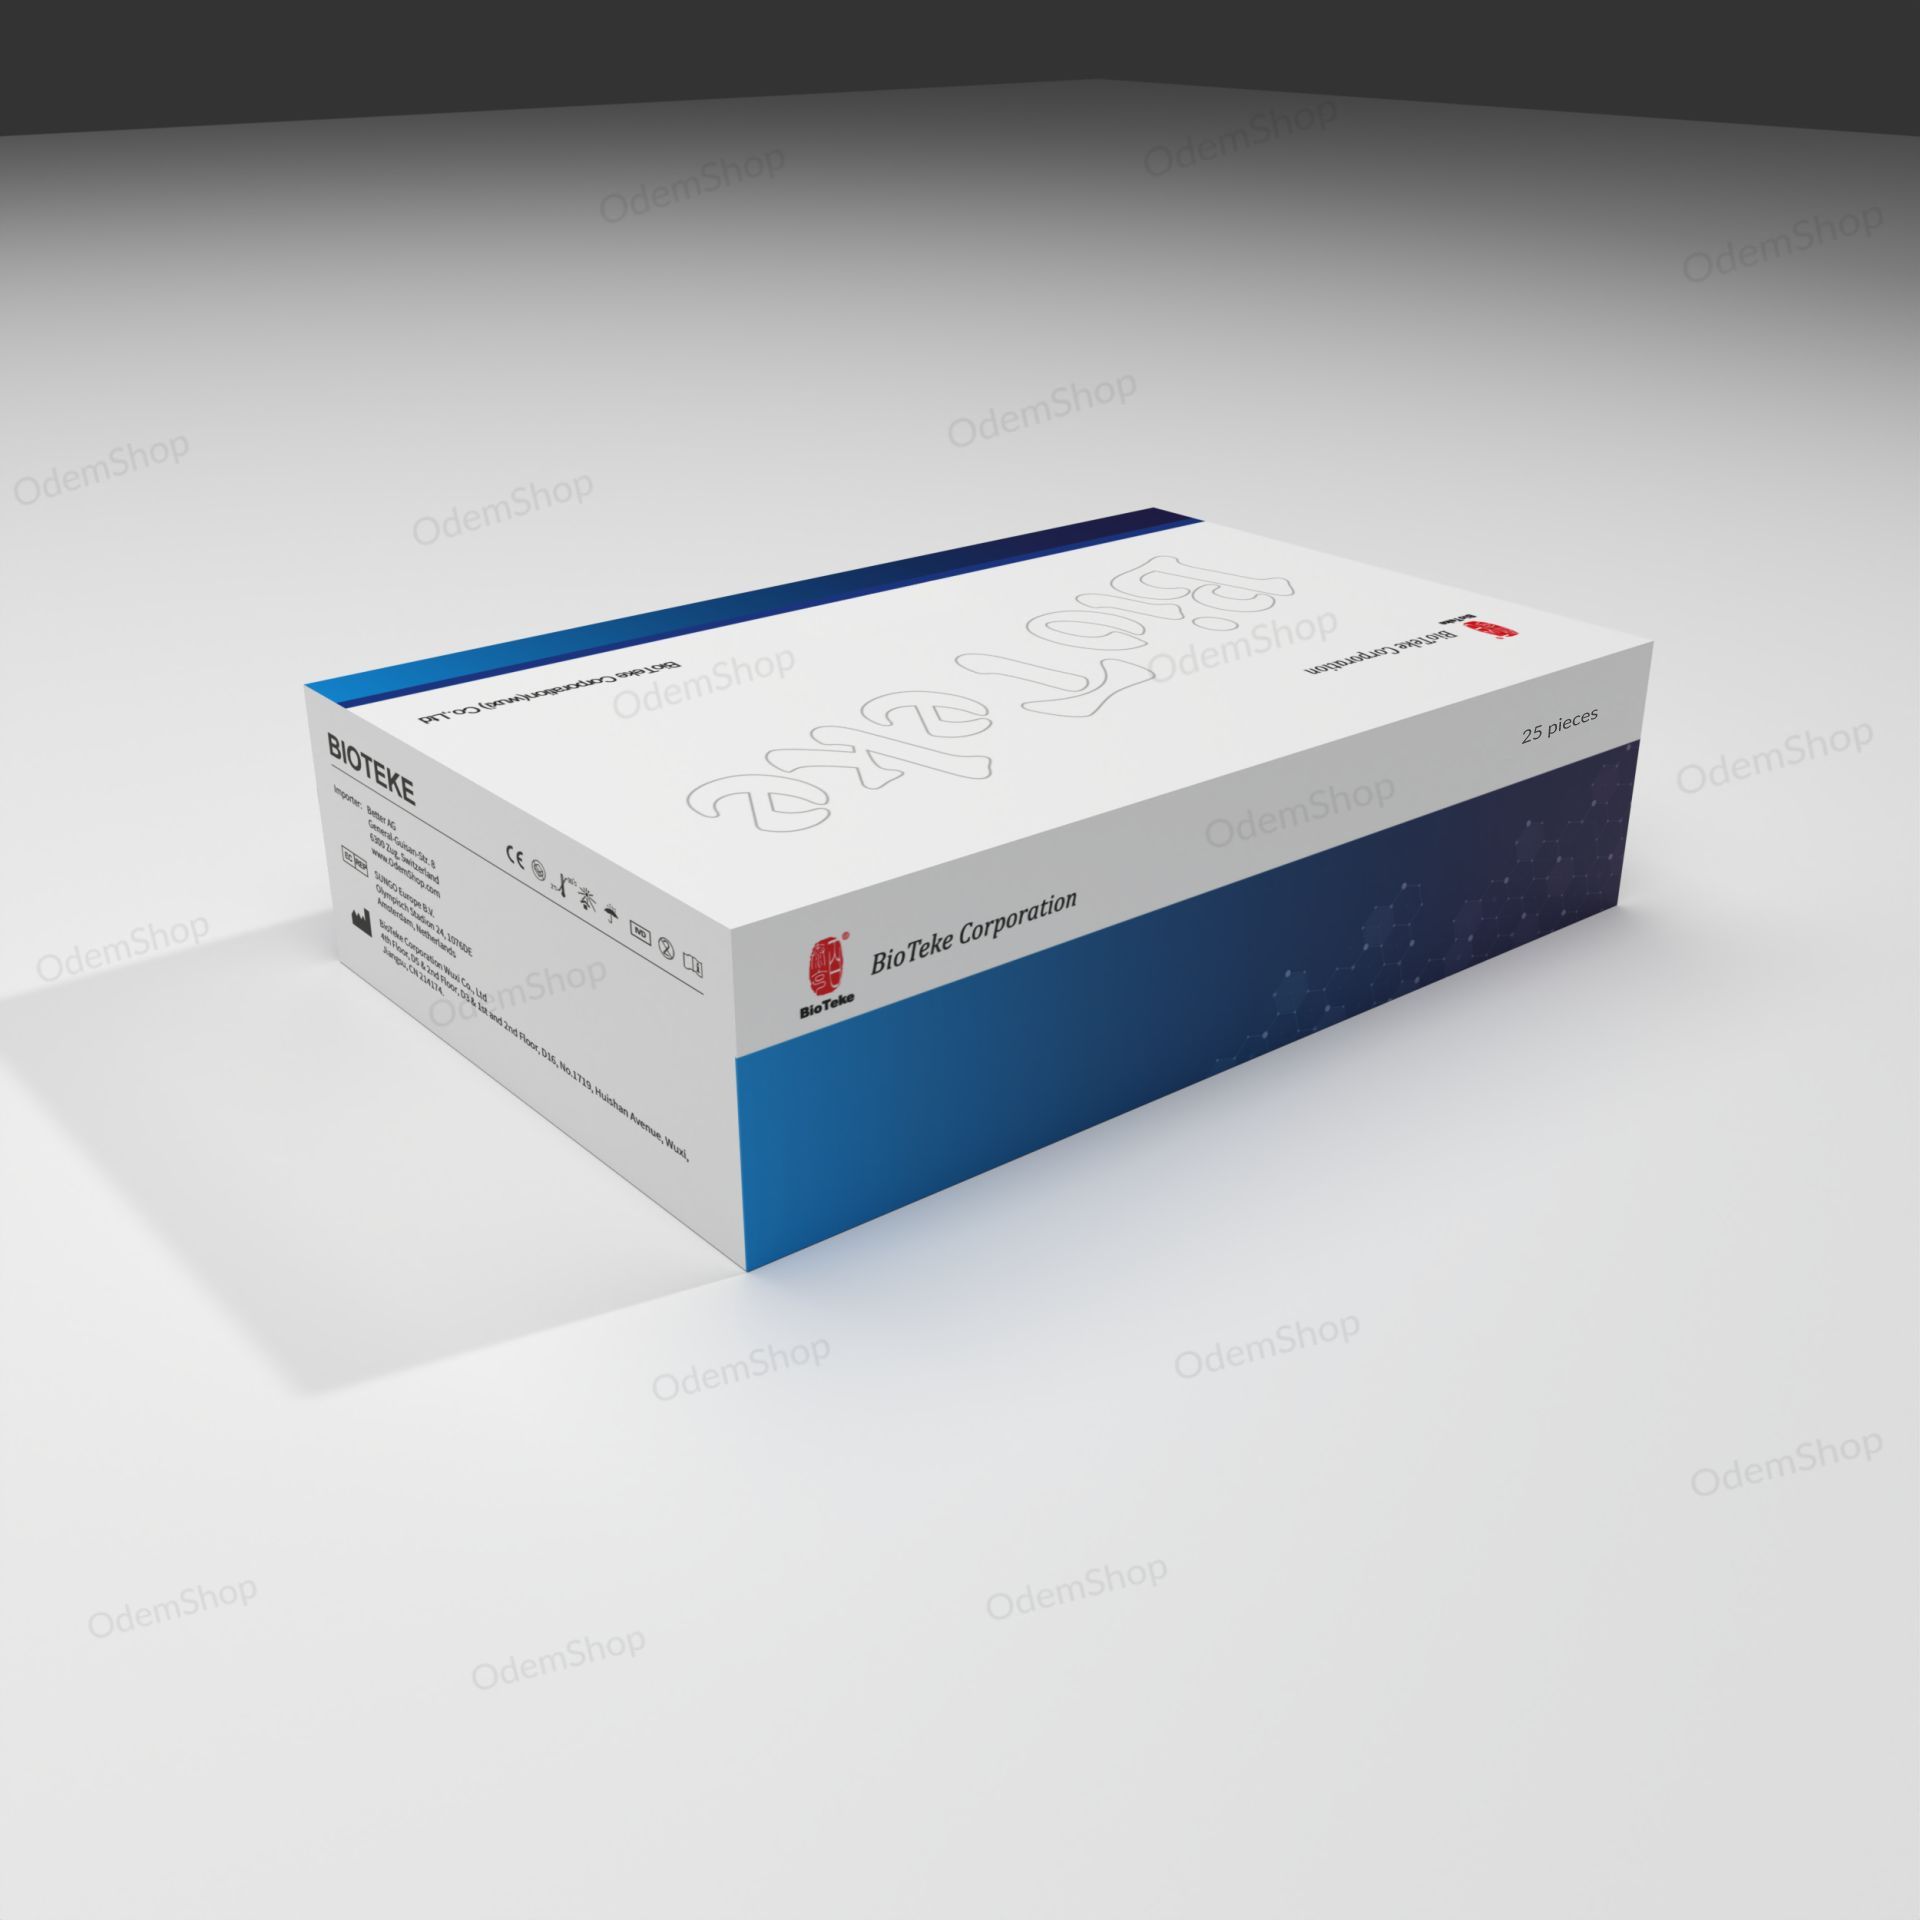 Bioteke - COVID-19 Professional Antigen Rapid Tests